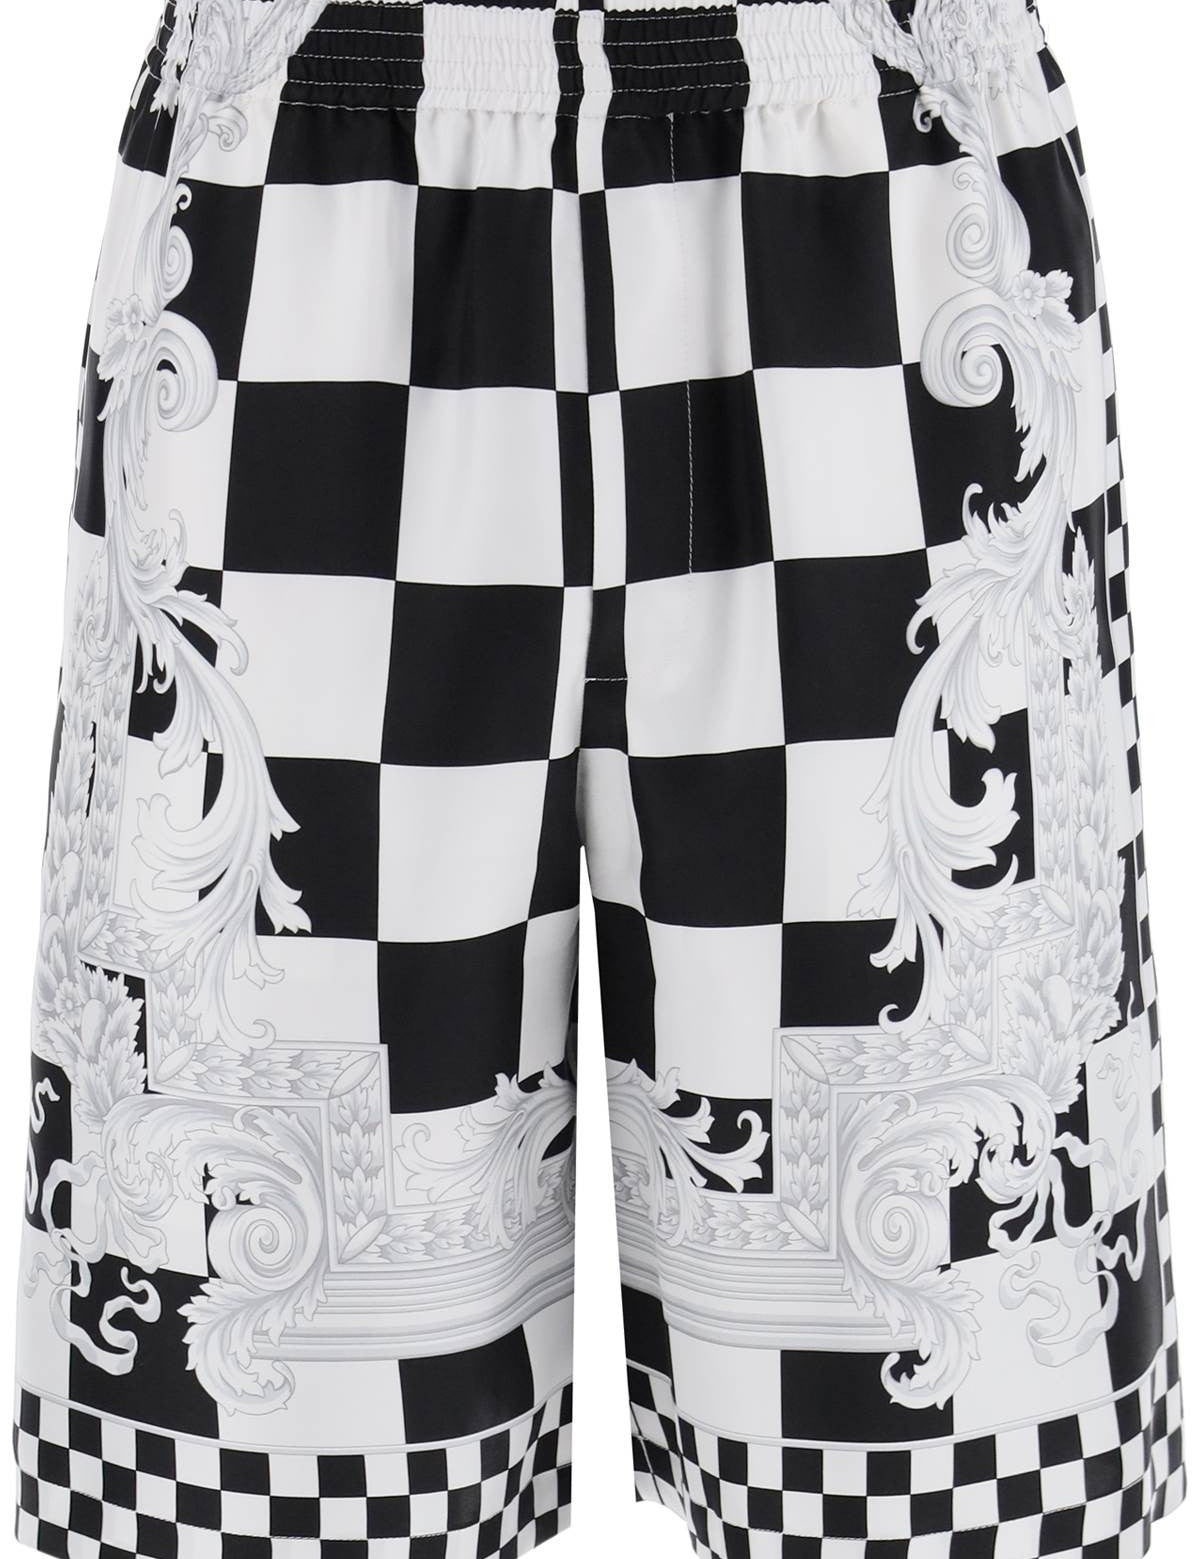 versace-printed-silk-bermuda-shorts-set.jpg